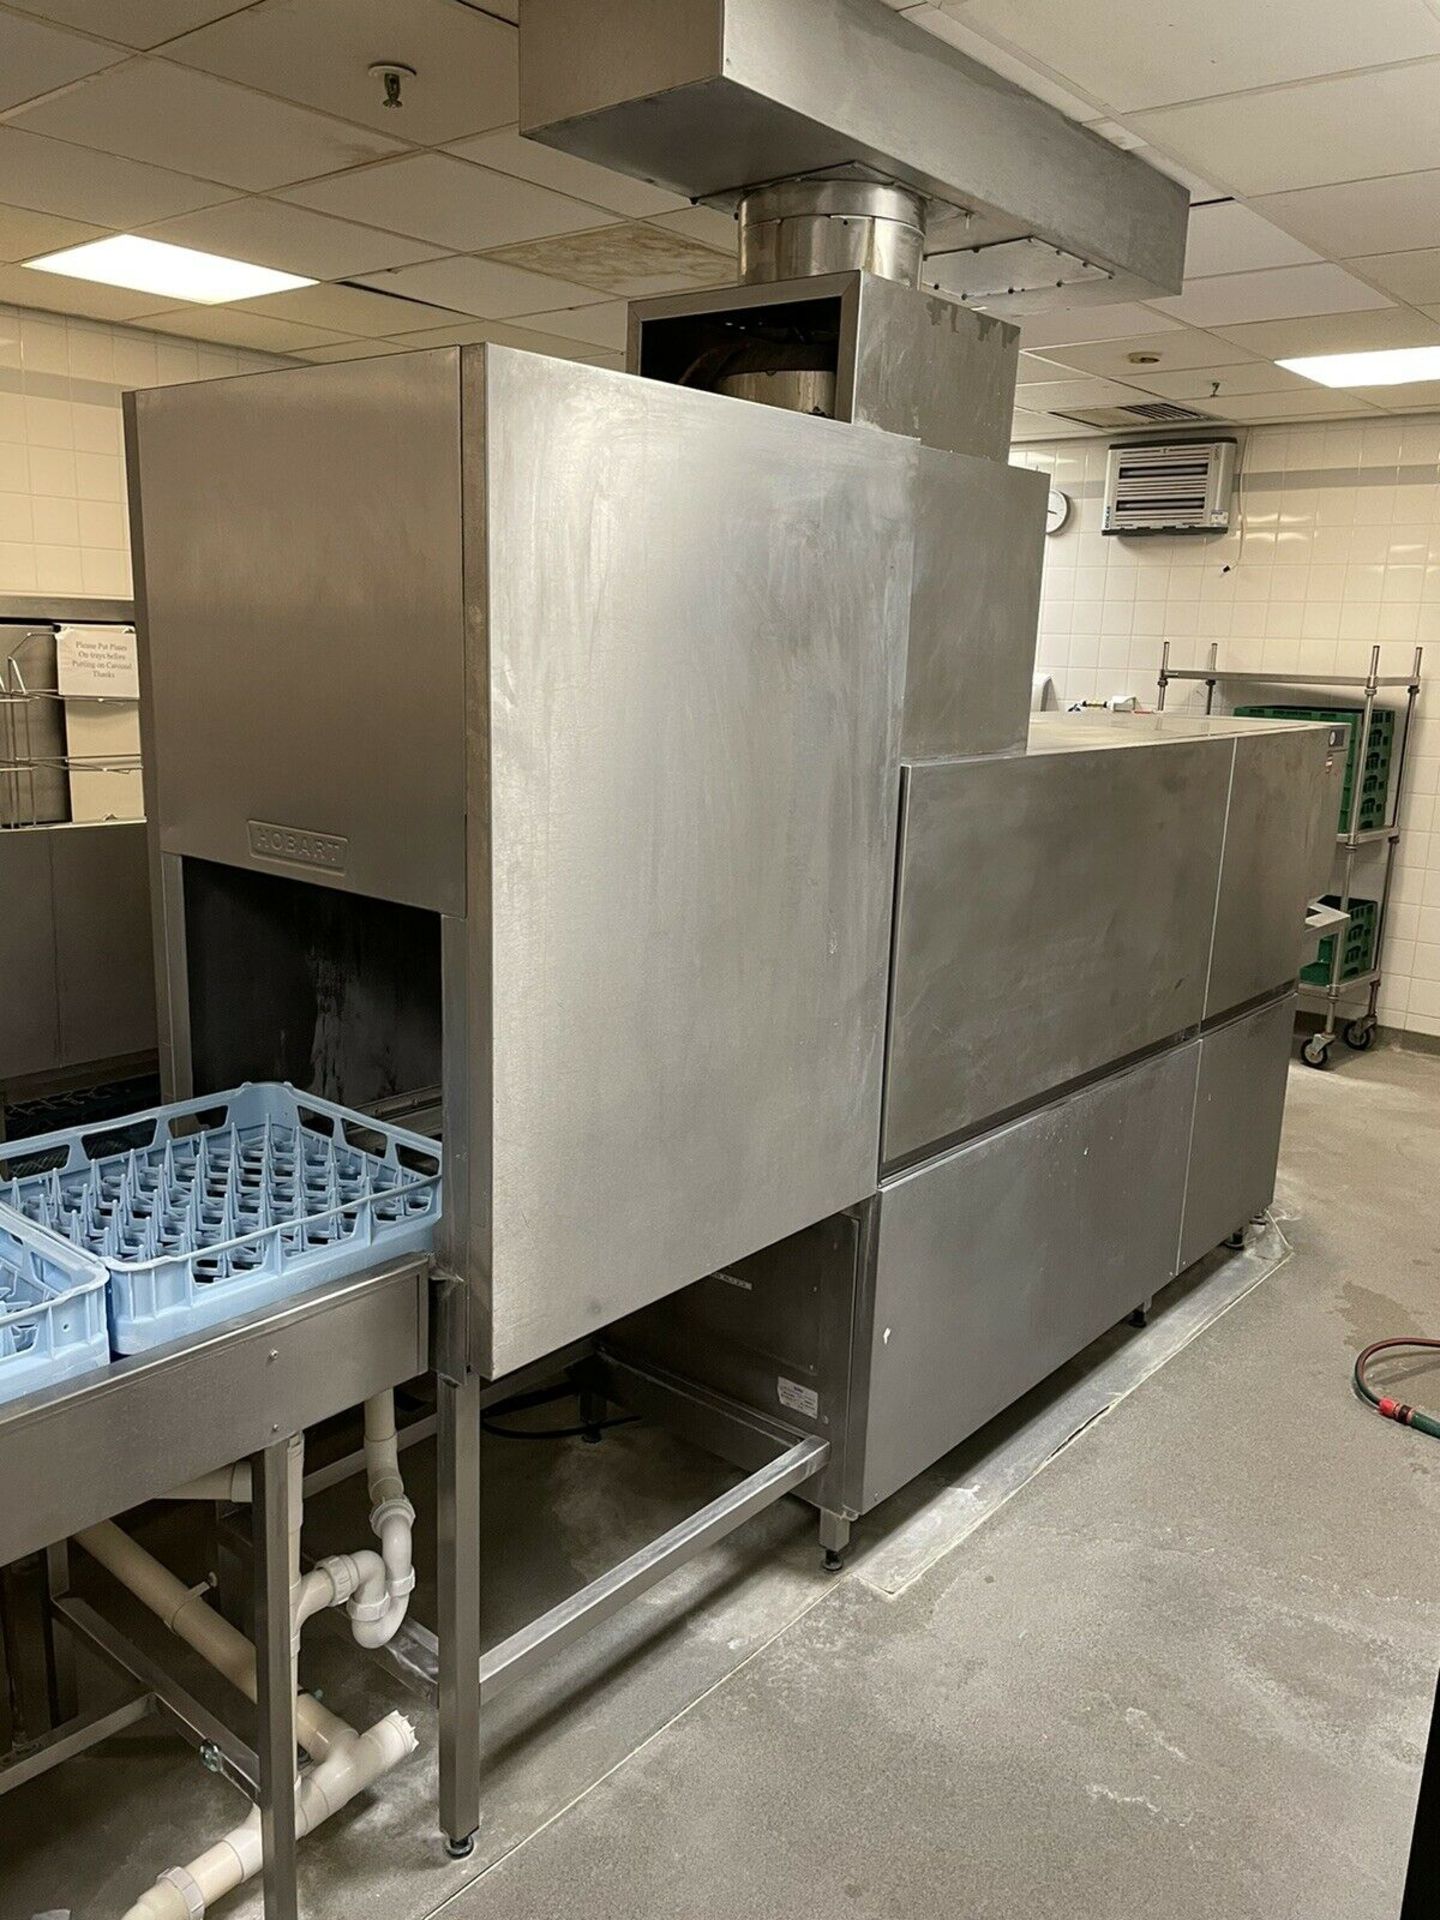 Hobart Cnla Cds Automatic Conveyor Dishwasher Mach - Image 5 of 7